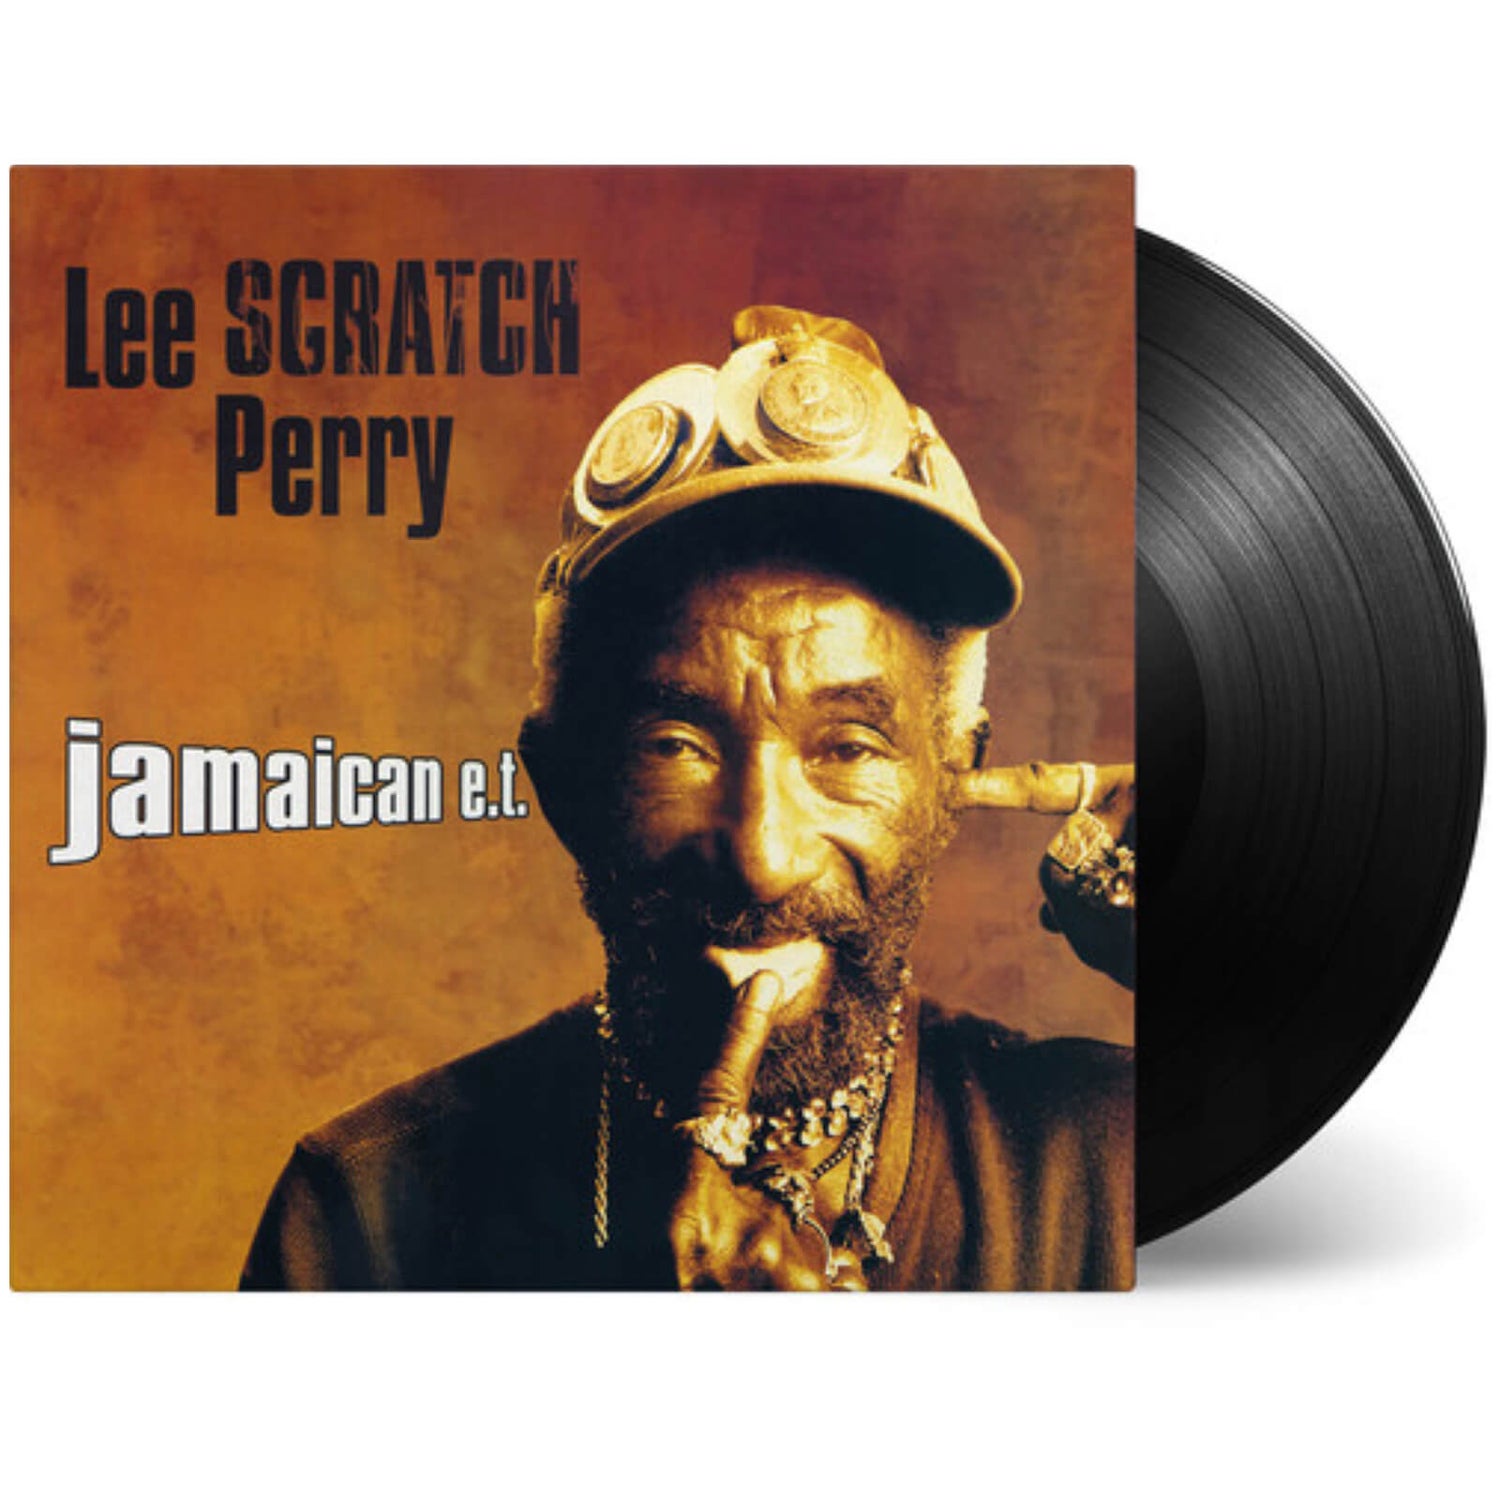 Lee "Scratch" Perry - Jamaican E.T. 180g Vinyl